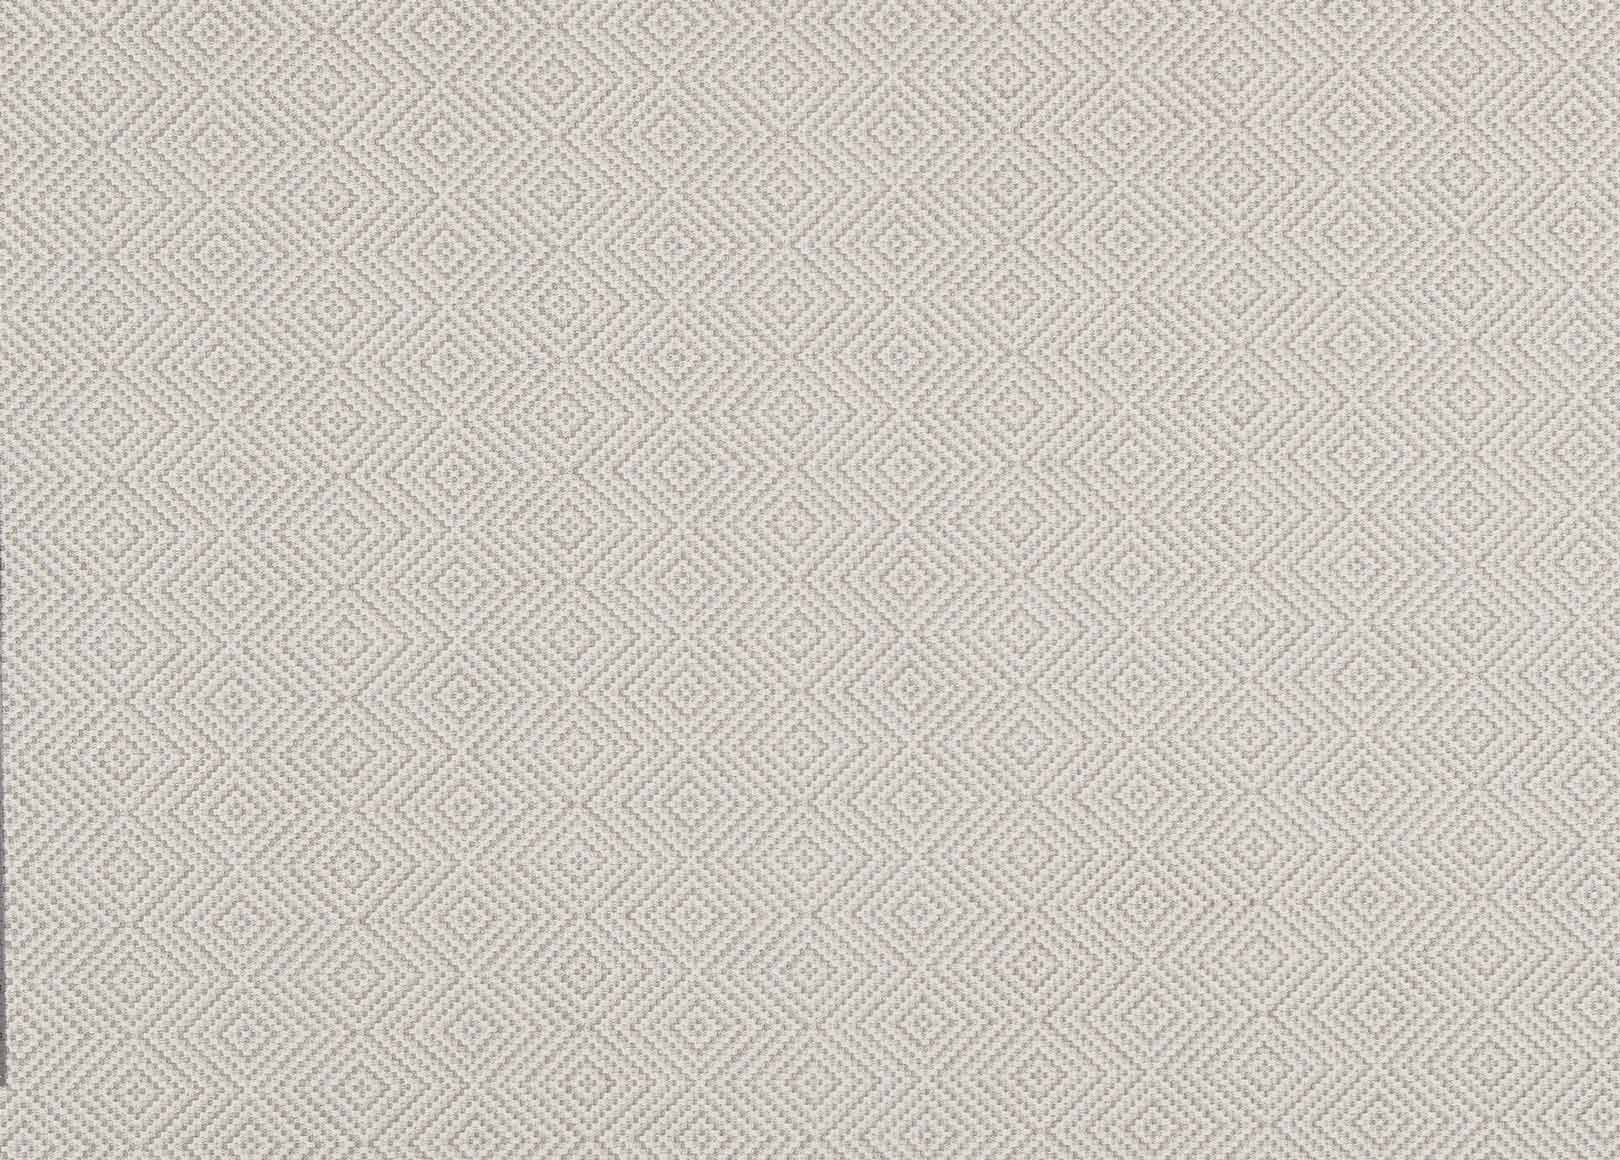 Saivet Gray Fabric Swatch | Ethan Allen